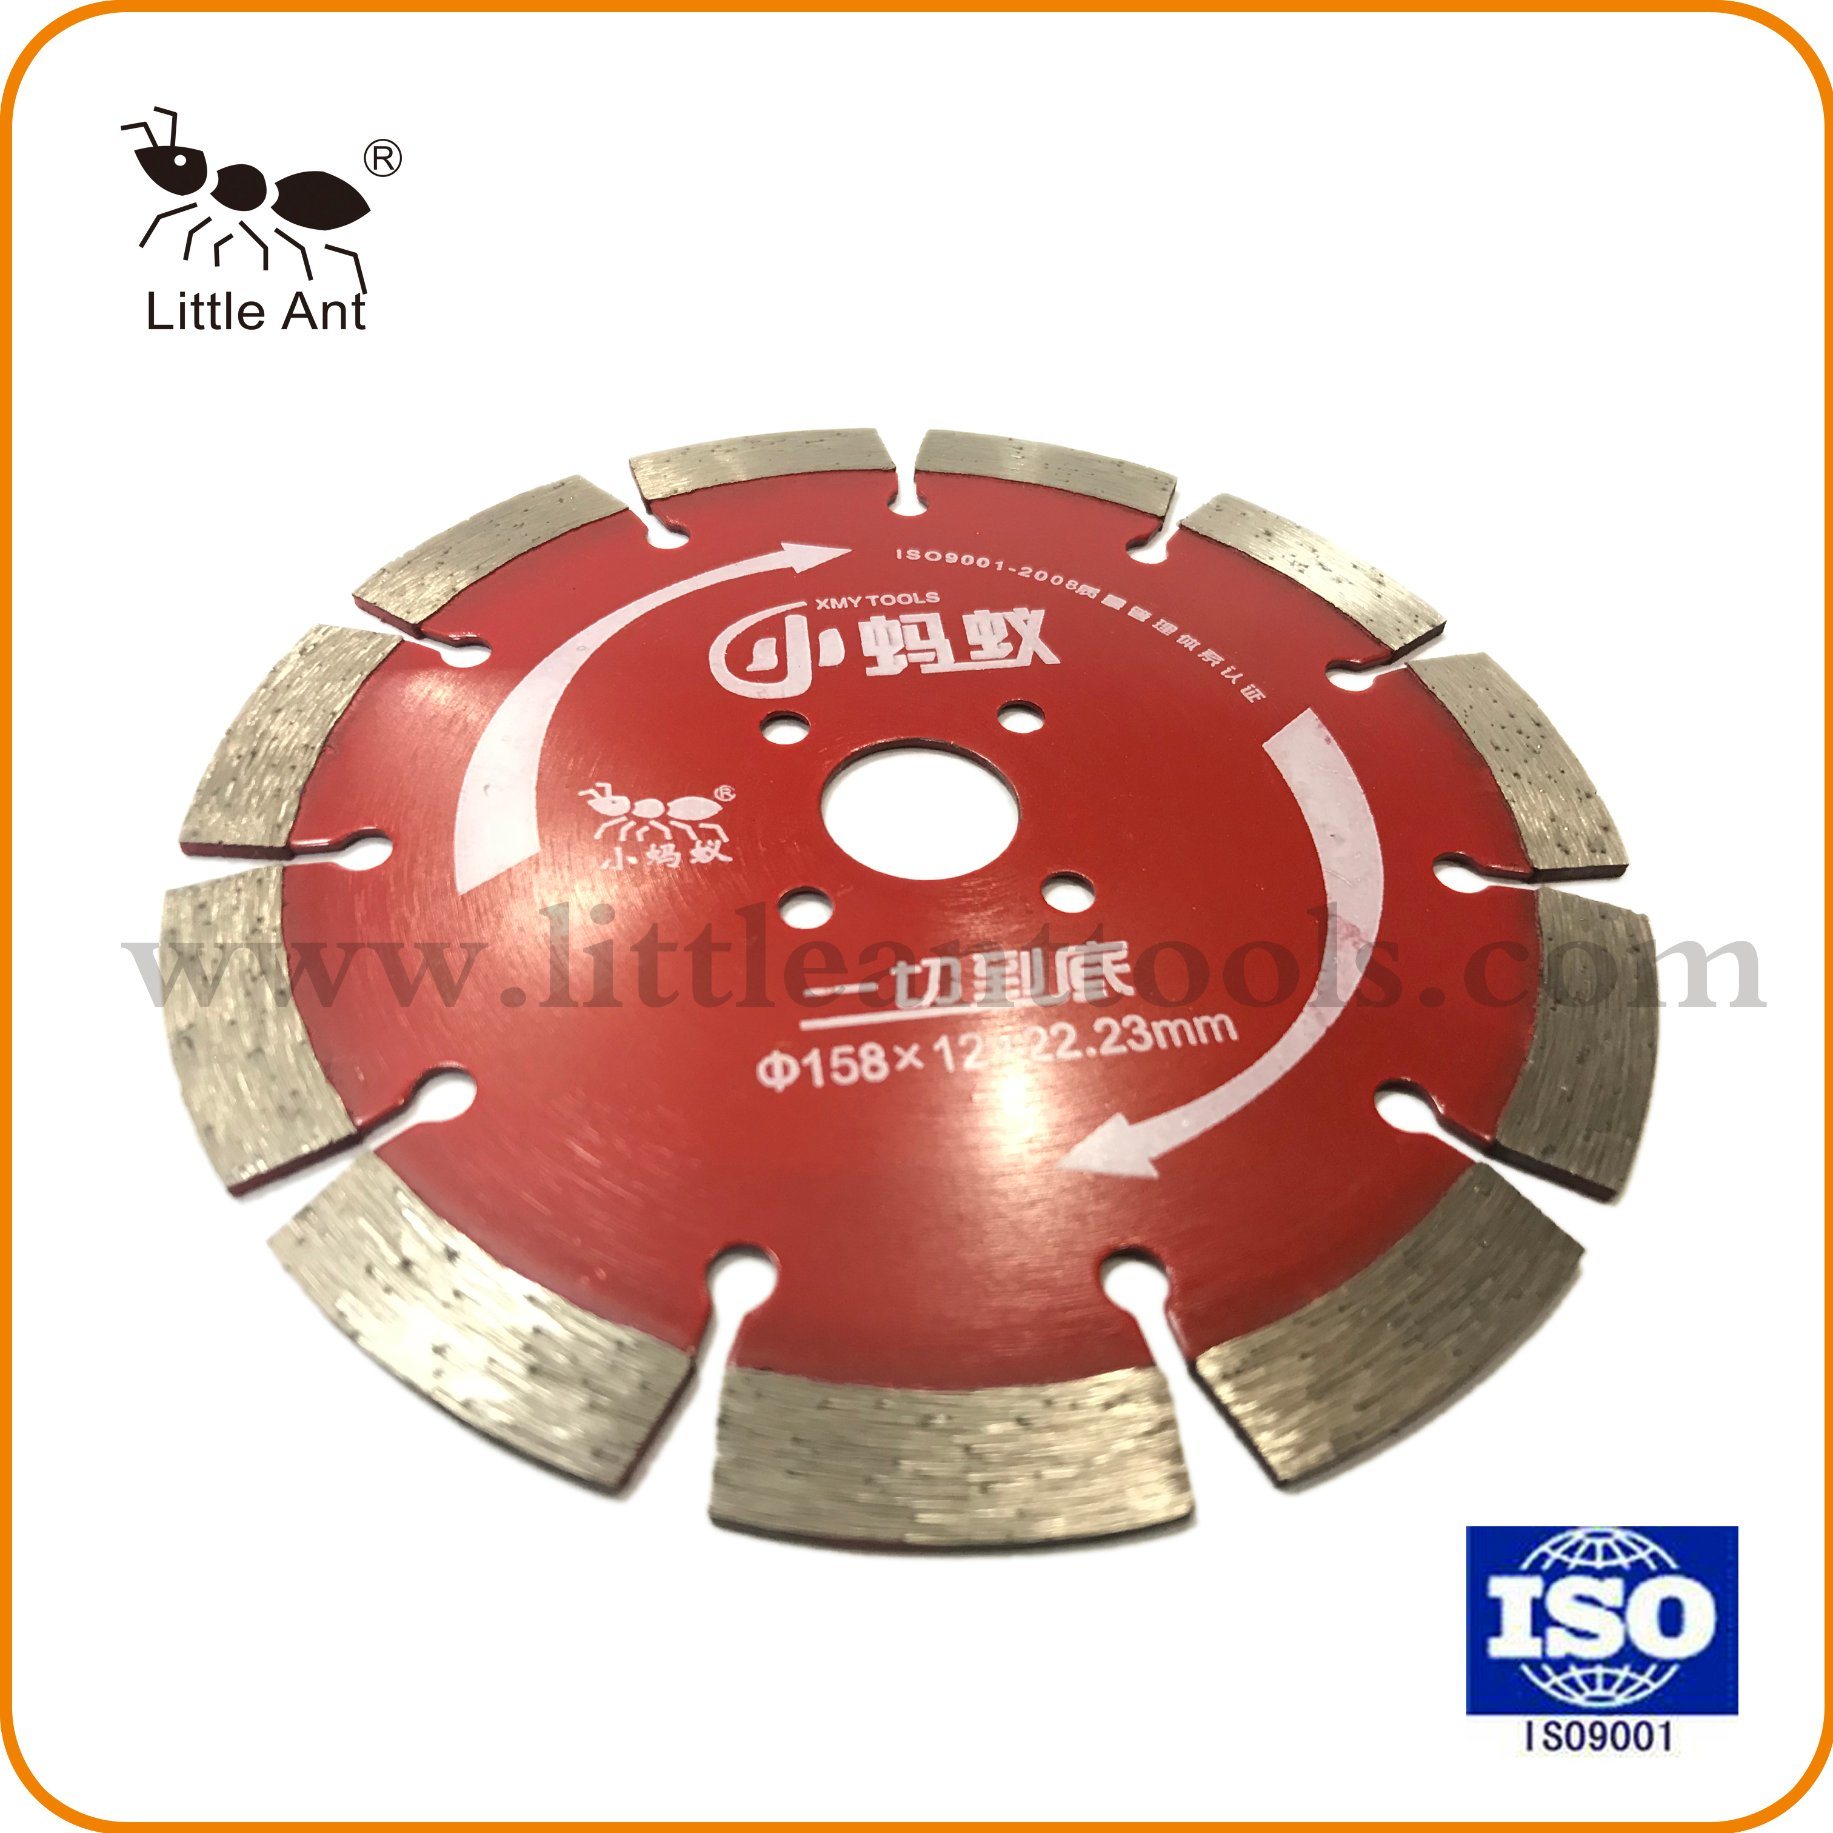 158mm Dry Use Cutting Disk Power Tools Hot-Pressed Diamond Circular Saw Blade